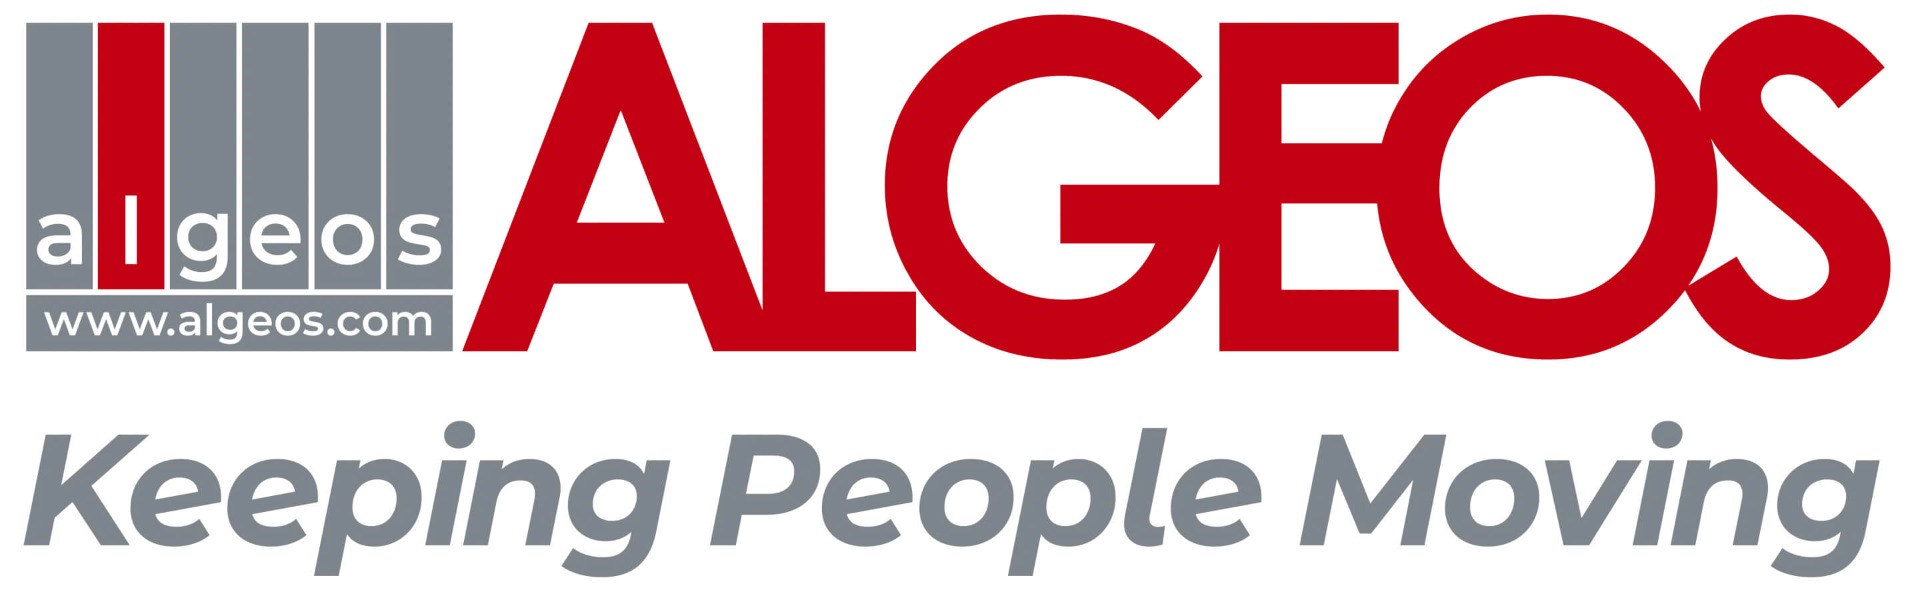 algeos-moving-standard-rgb